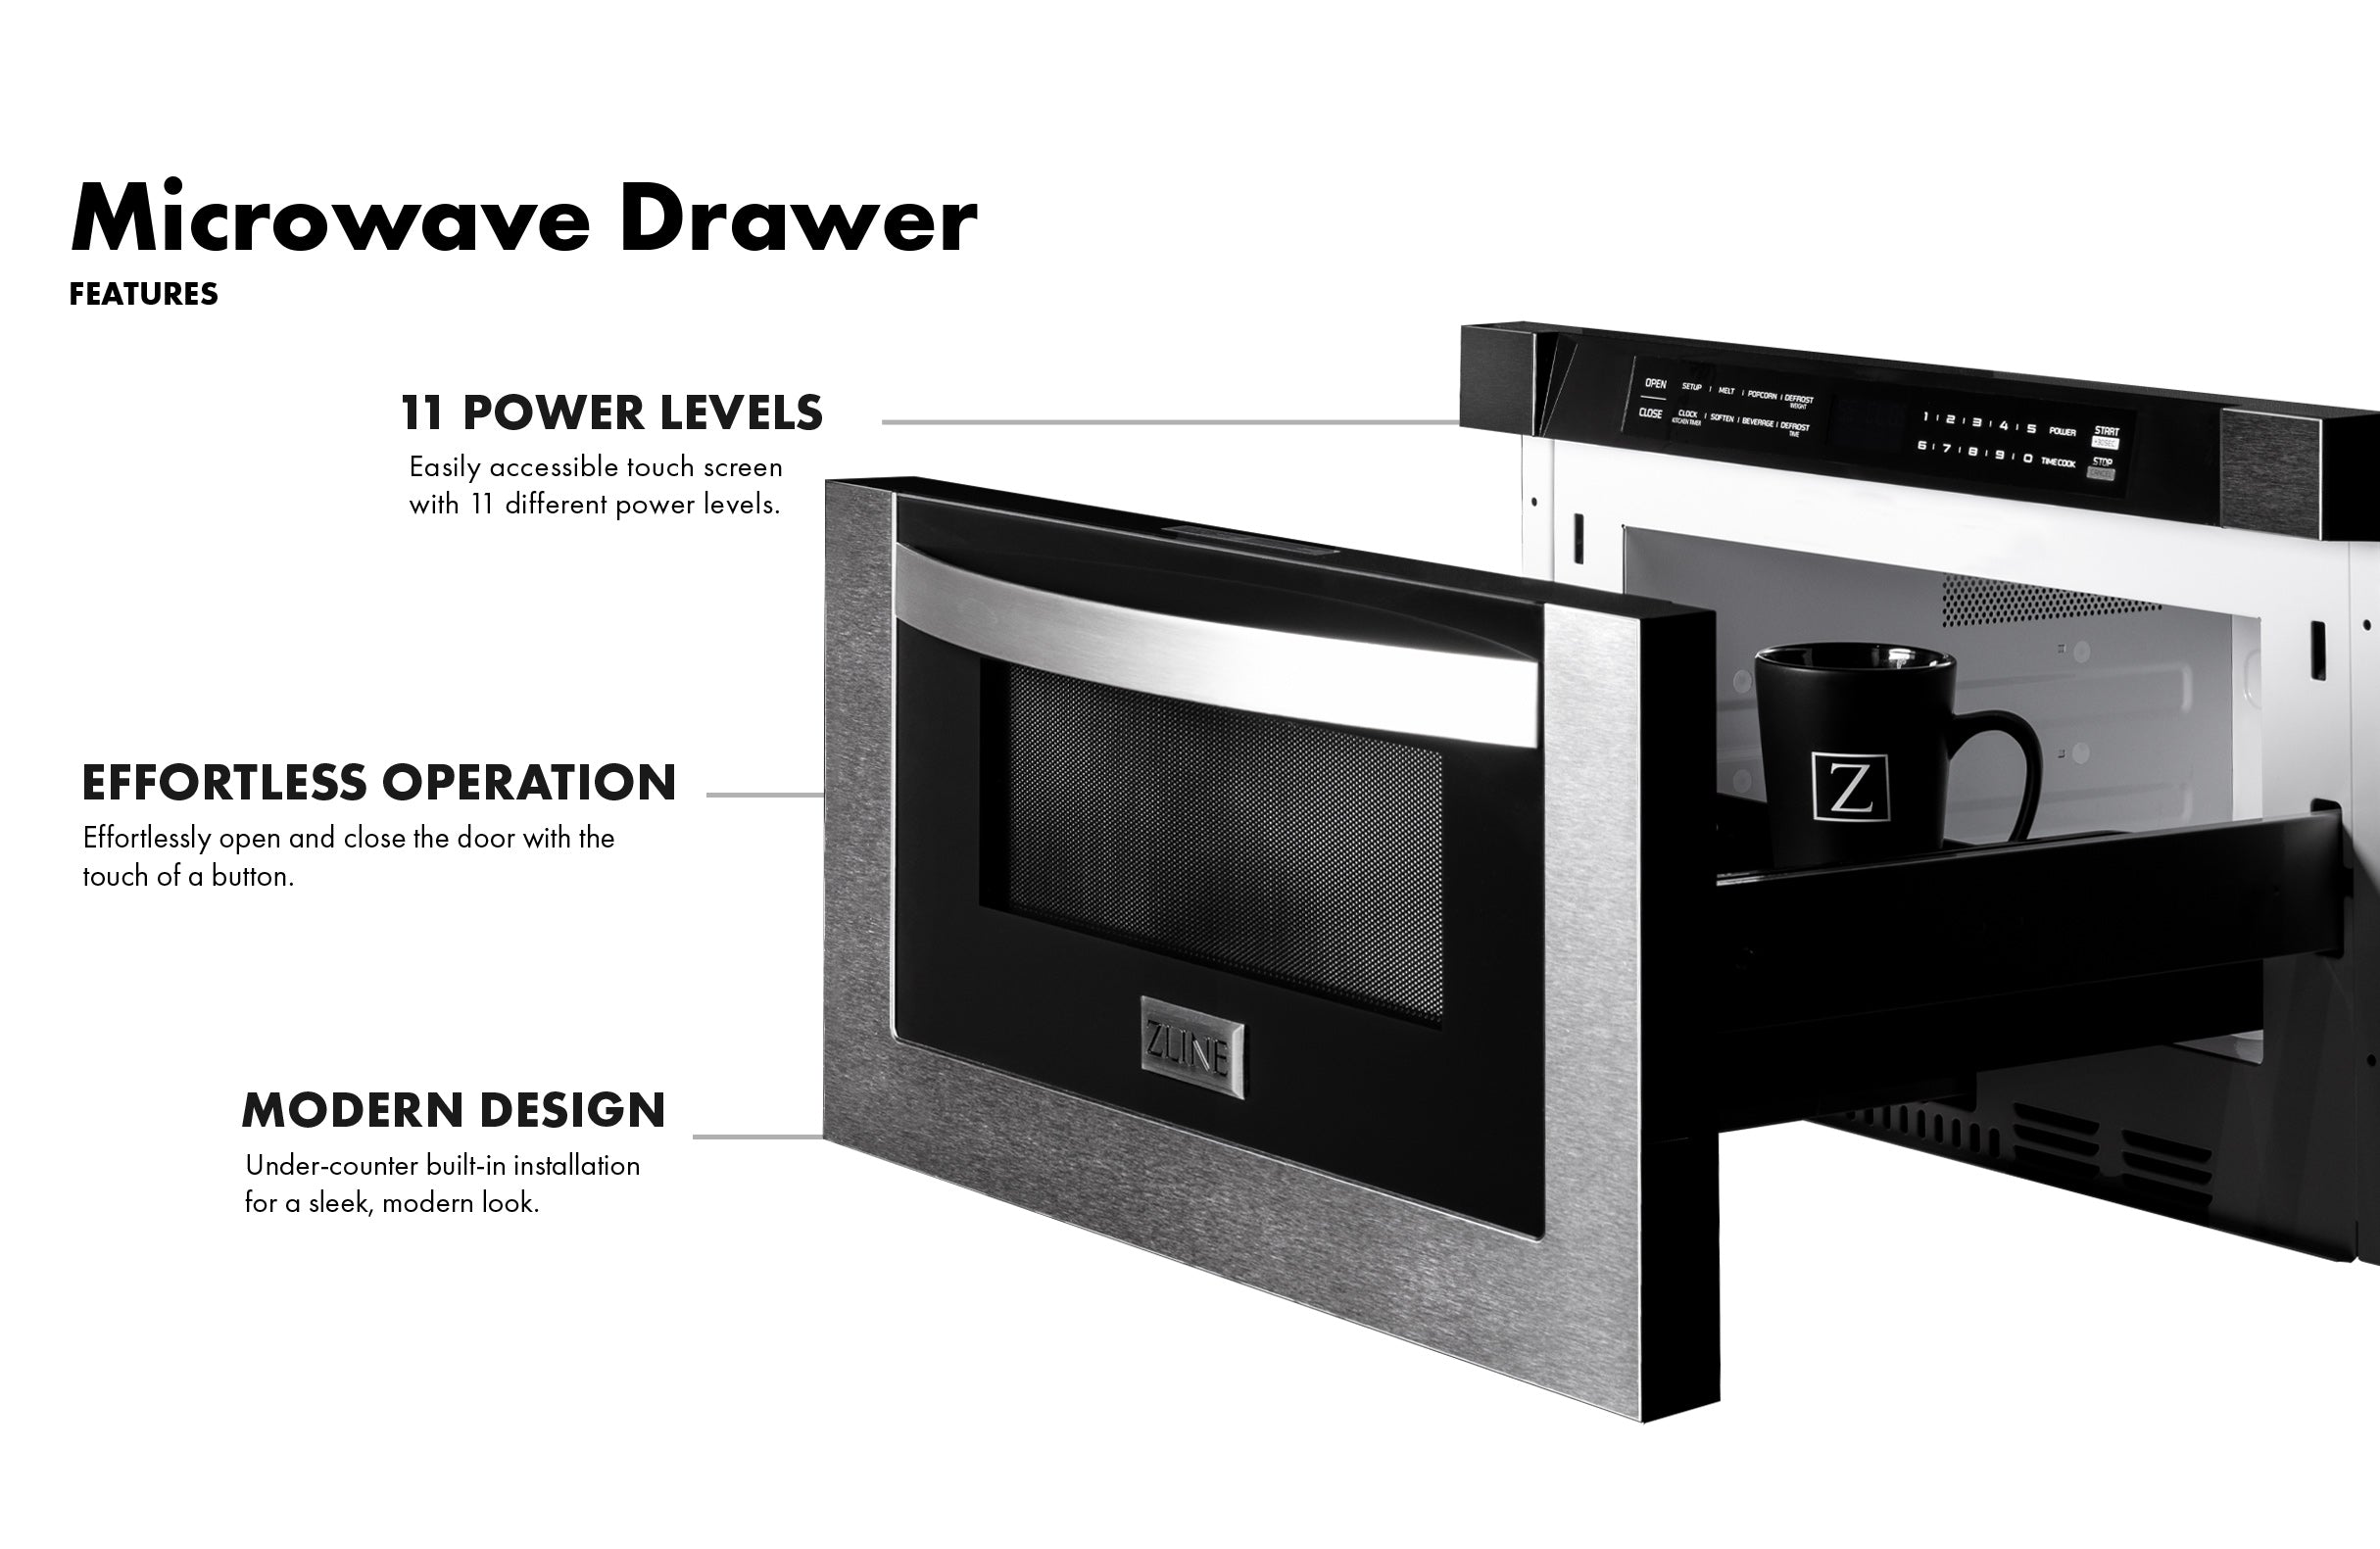 ZLINE 30 in. 1.2 Cu. ft. Stainless Steel Built-in Microwave Drawer (MWD-30)